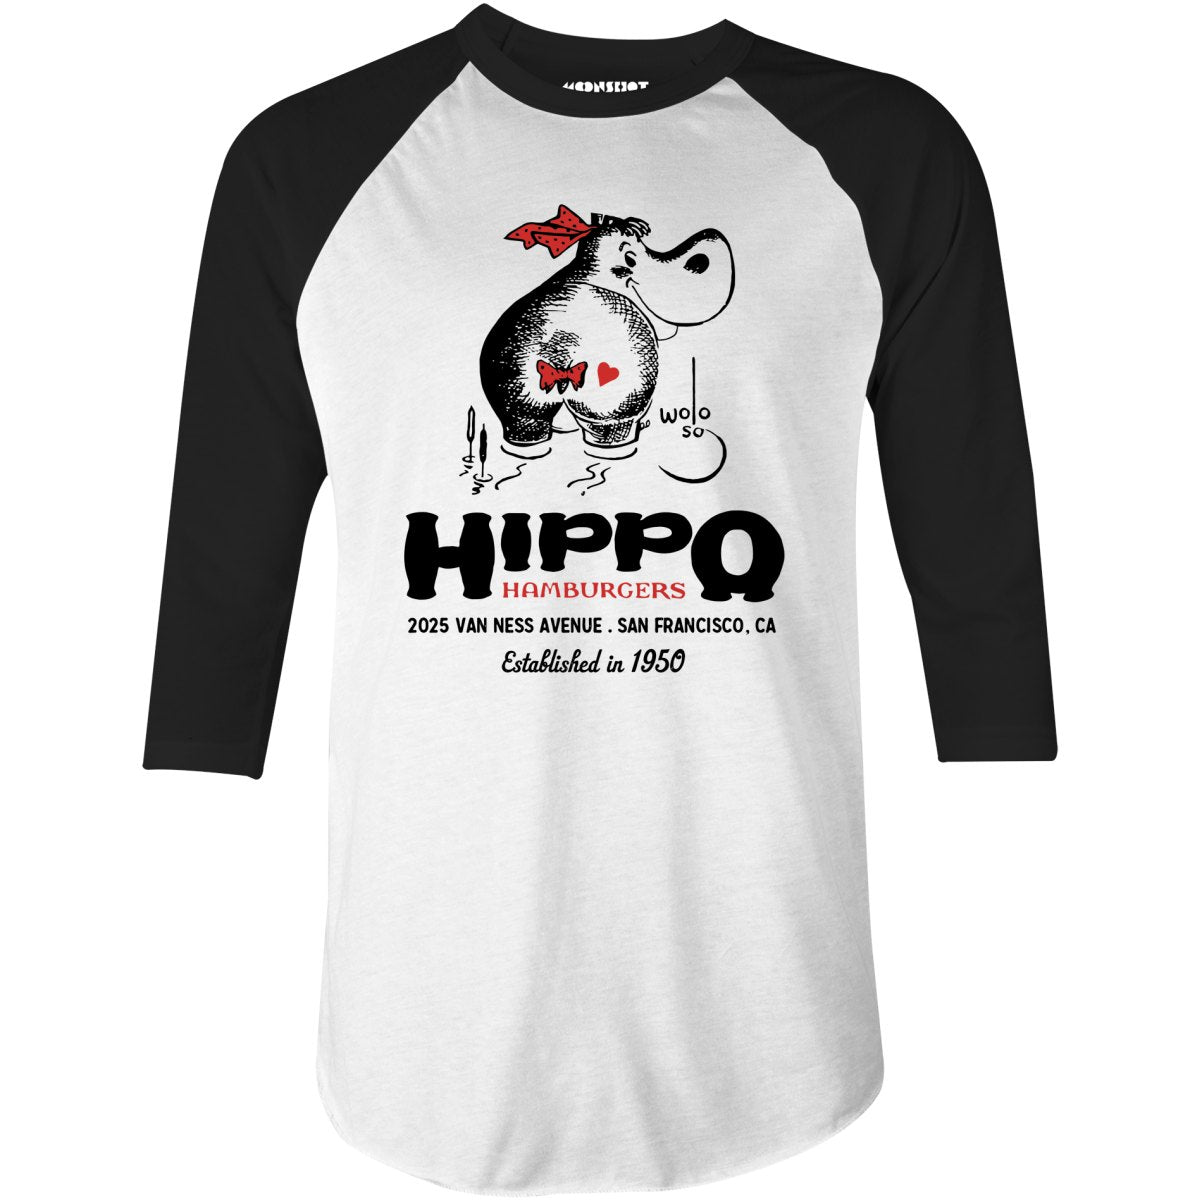 Hippo Hamburgers - San Francisco, CA - Vintage Restaurant - 3/4 Sleeve Raglan T-Shirt